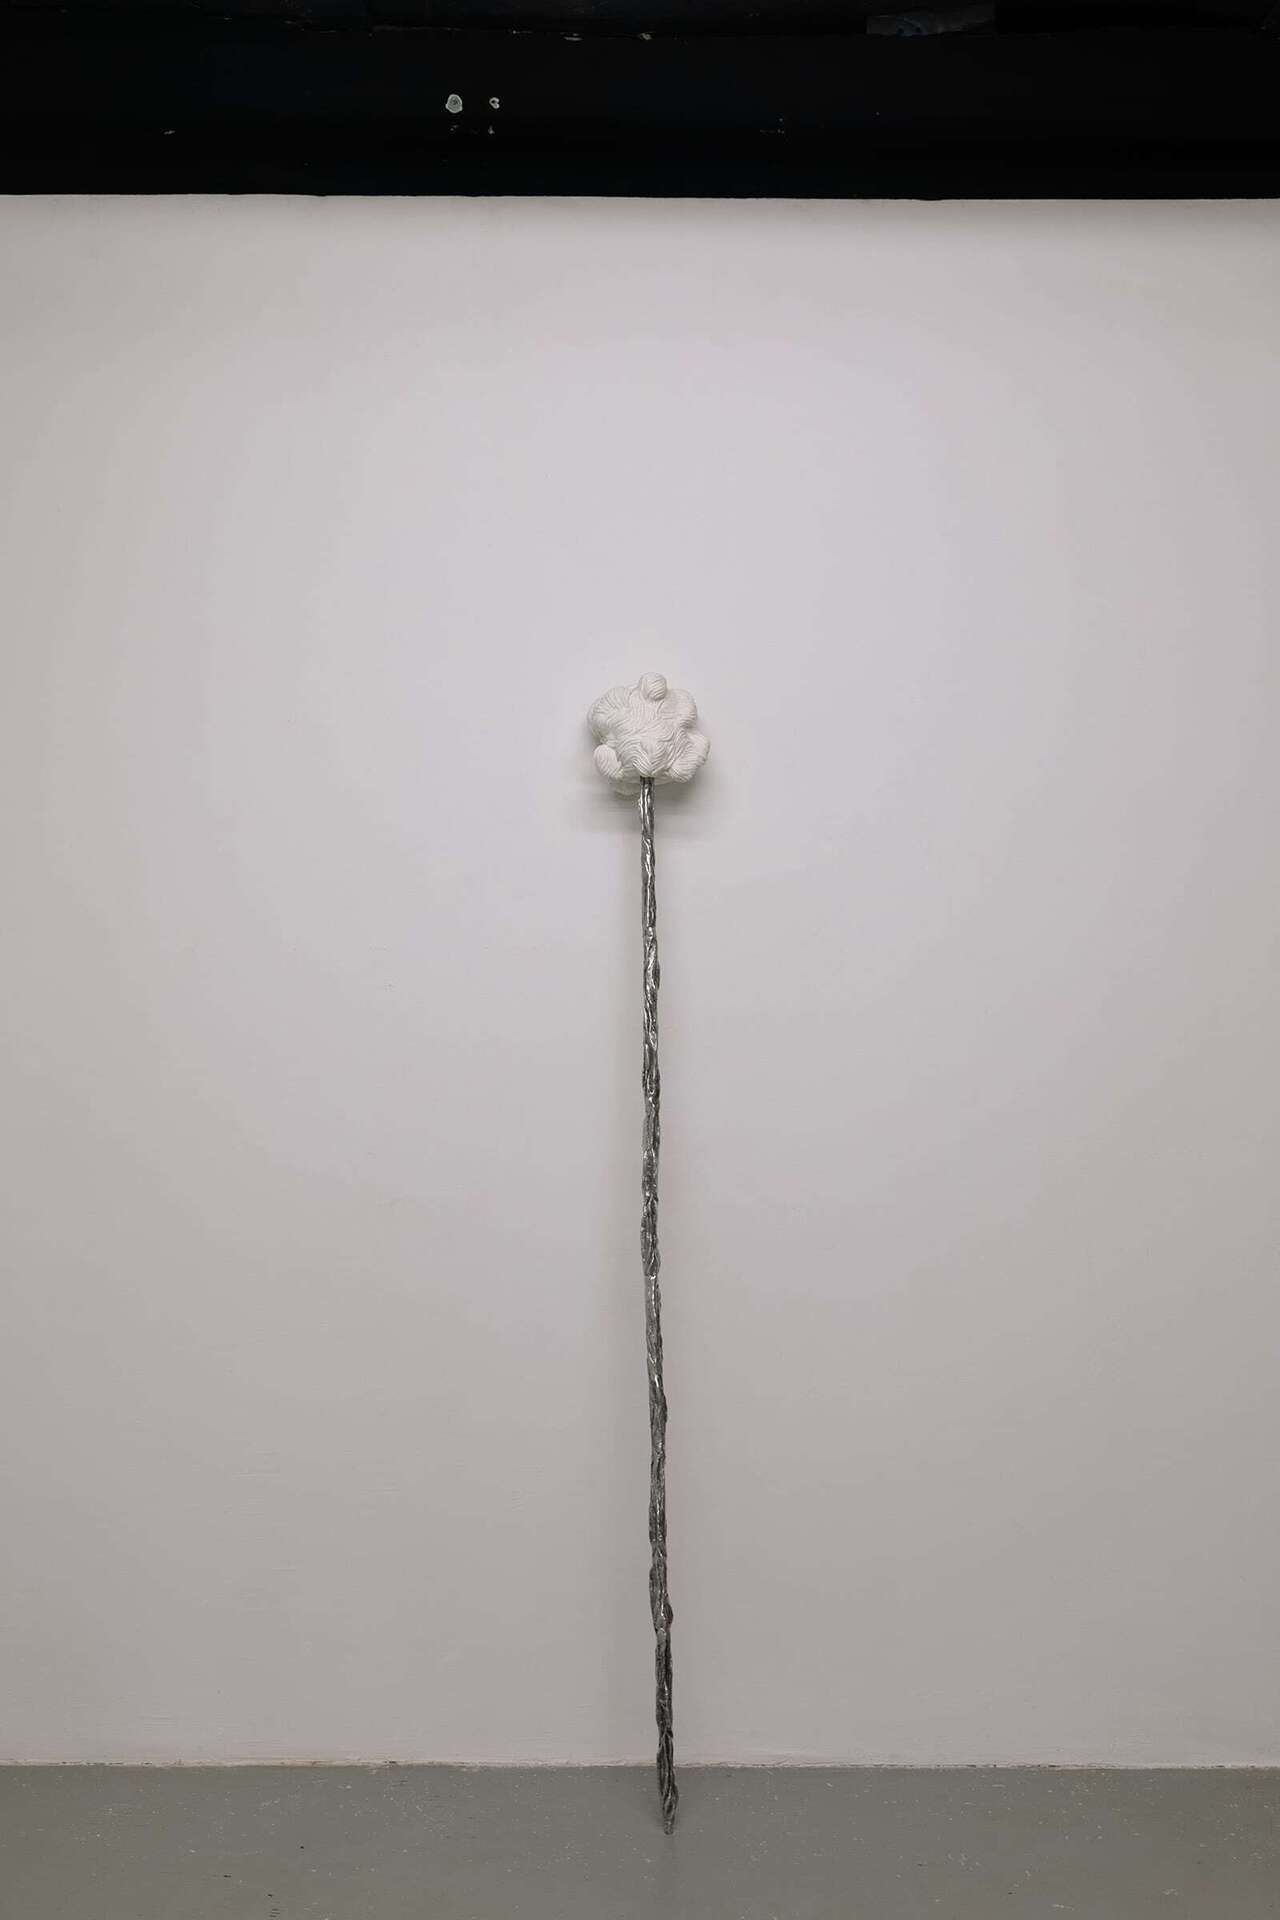 Dishon Yuldash, * Посох &l*, 2021, porcelain, aluminum casting, 170 x 20 x 3 cm